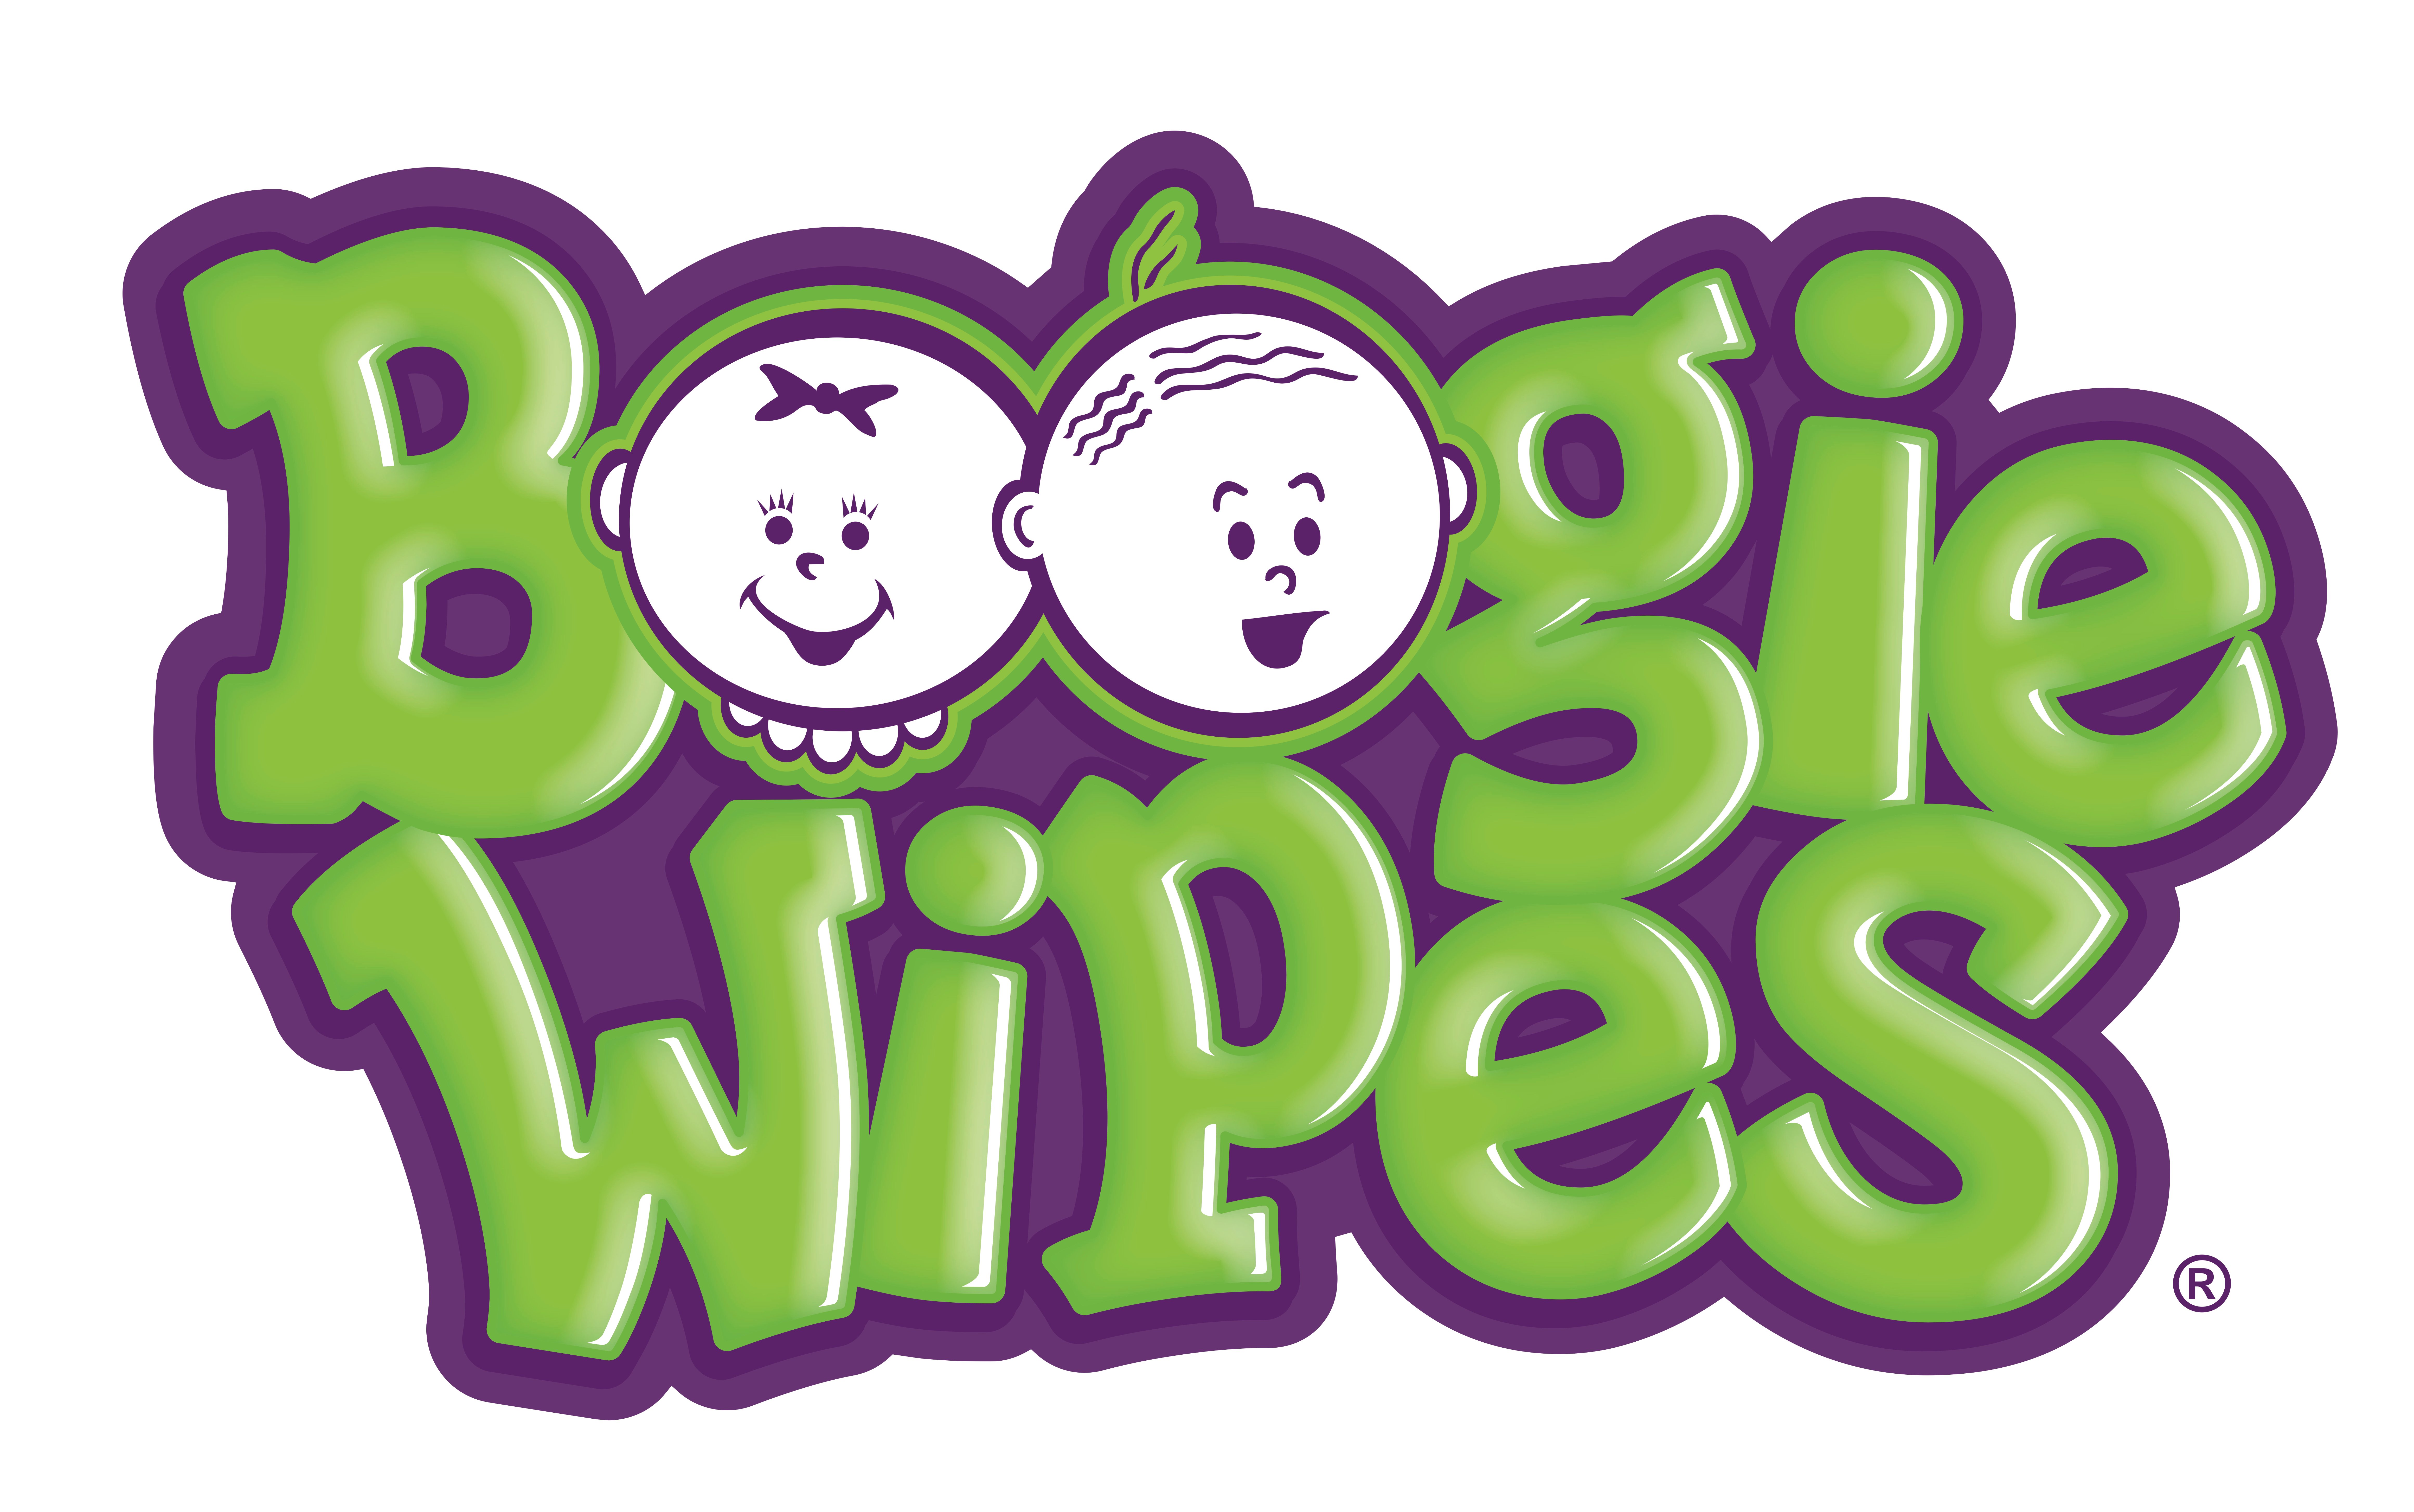 “BoogieWipes_logo